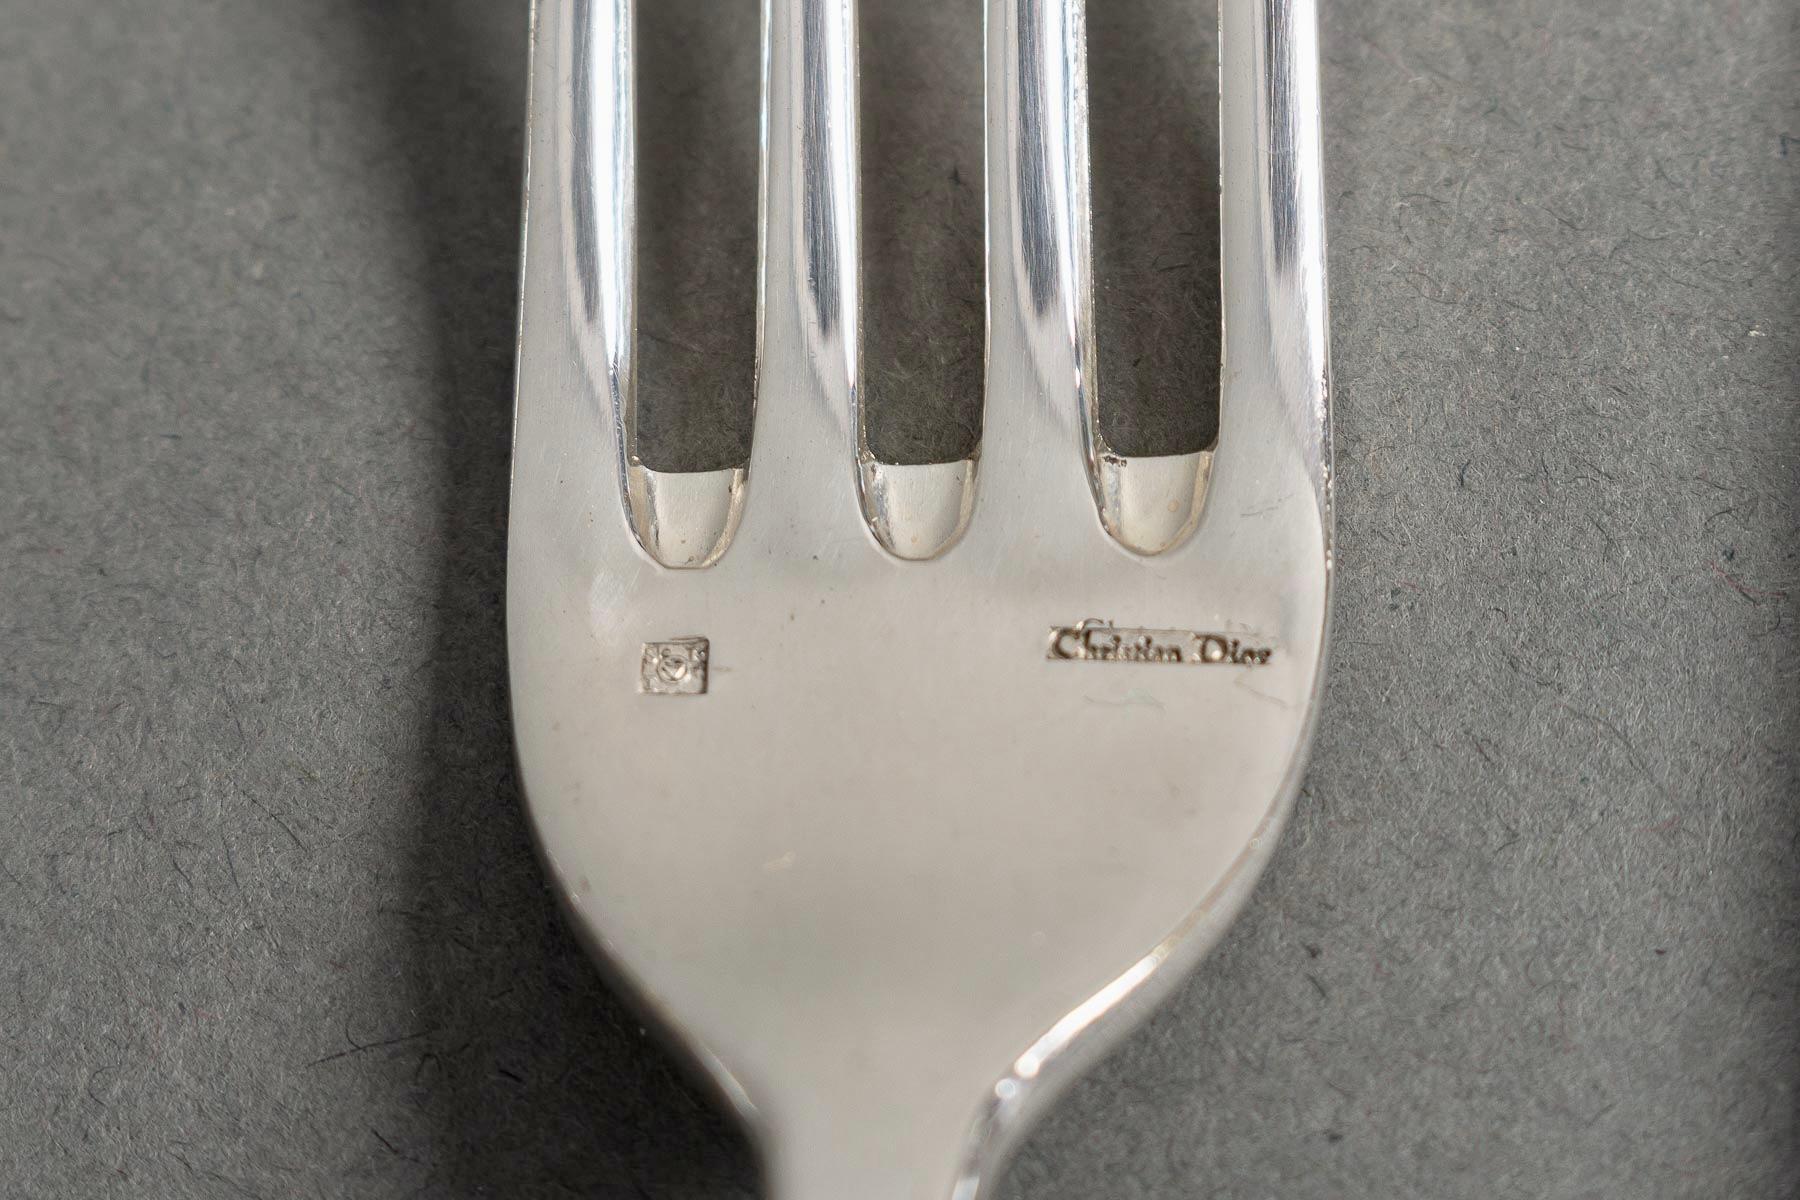 dior cutlery set